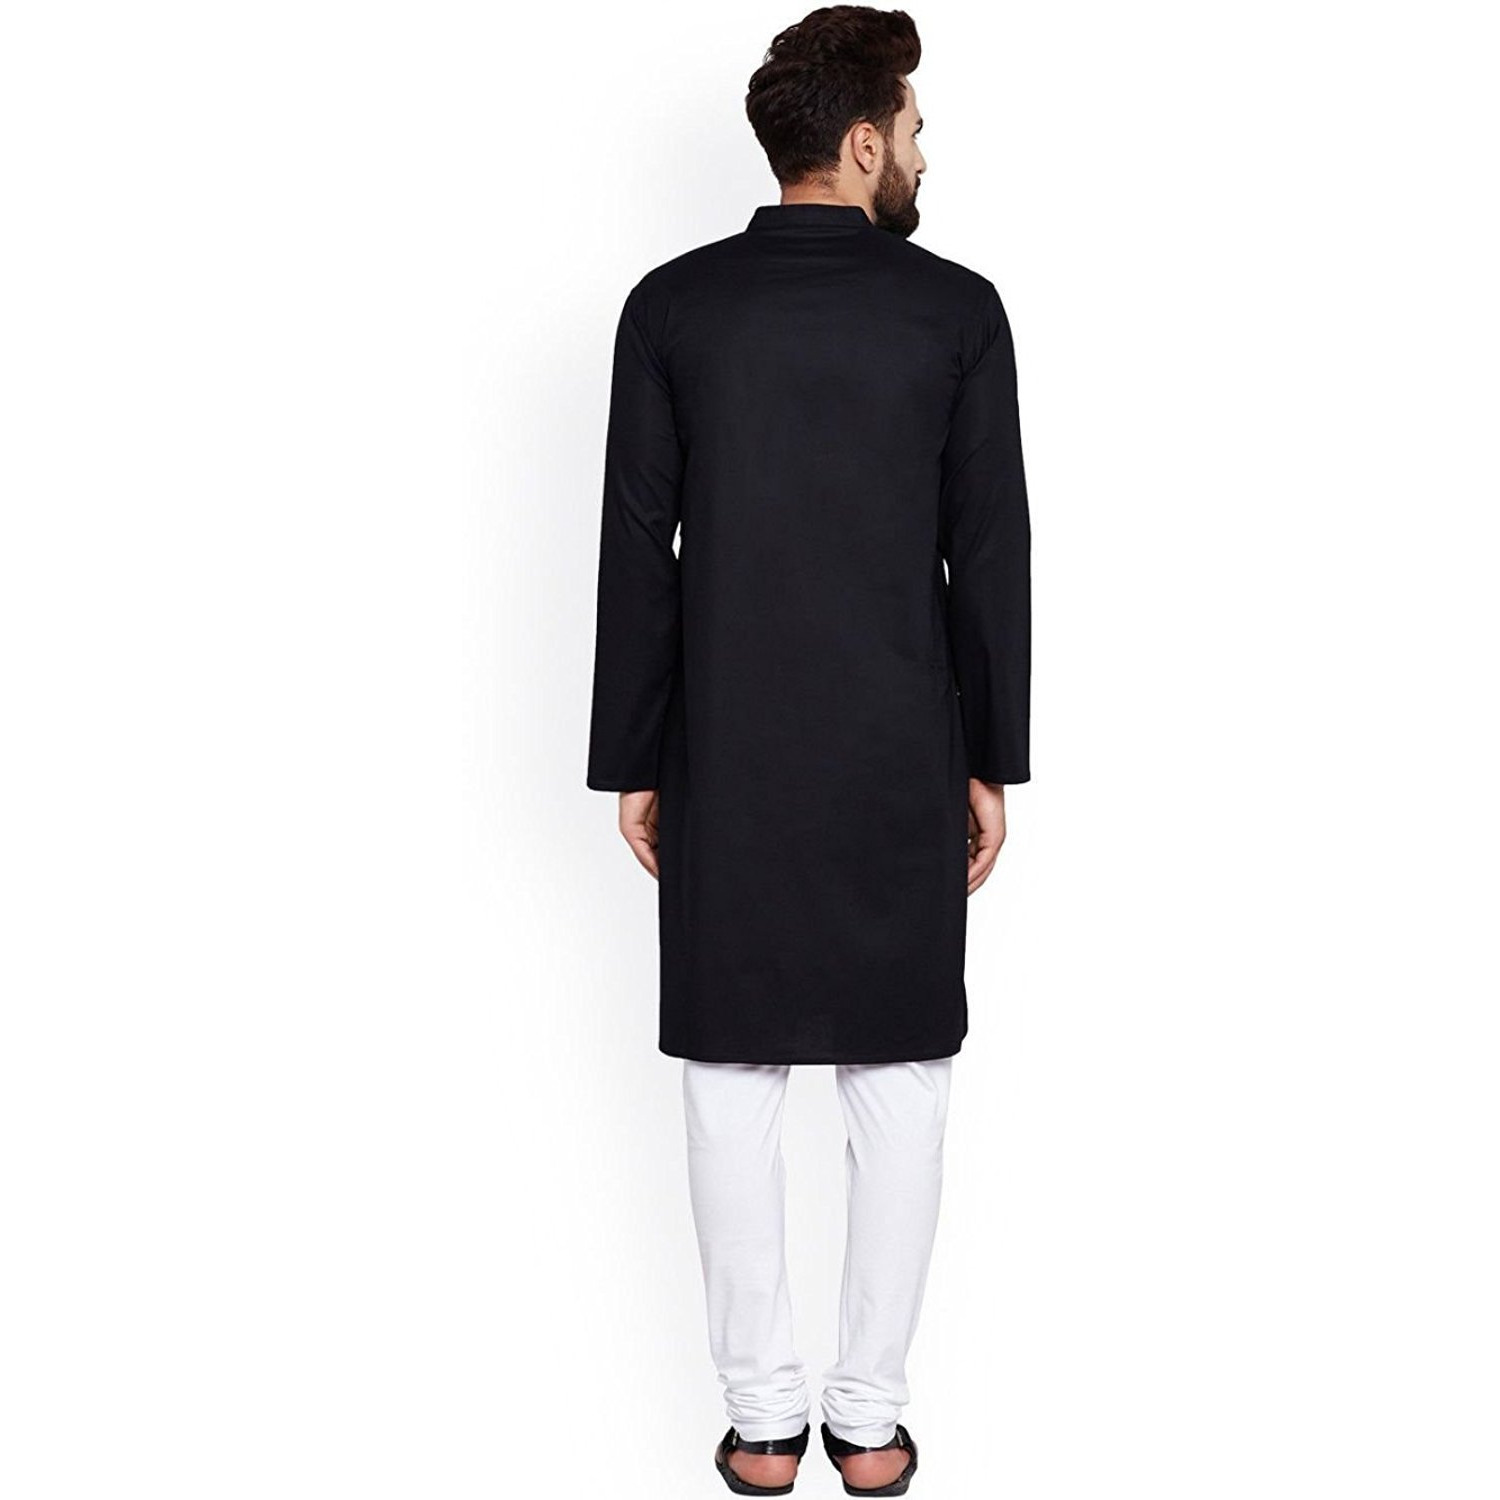 Black & White Cotton Kurta Pajama For Men Yoga Indian Clothing - Chest 42